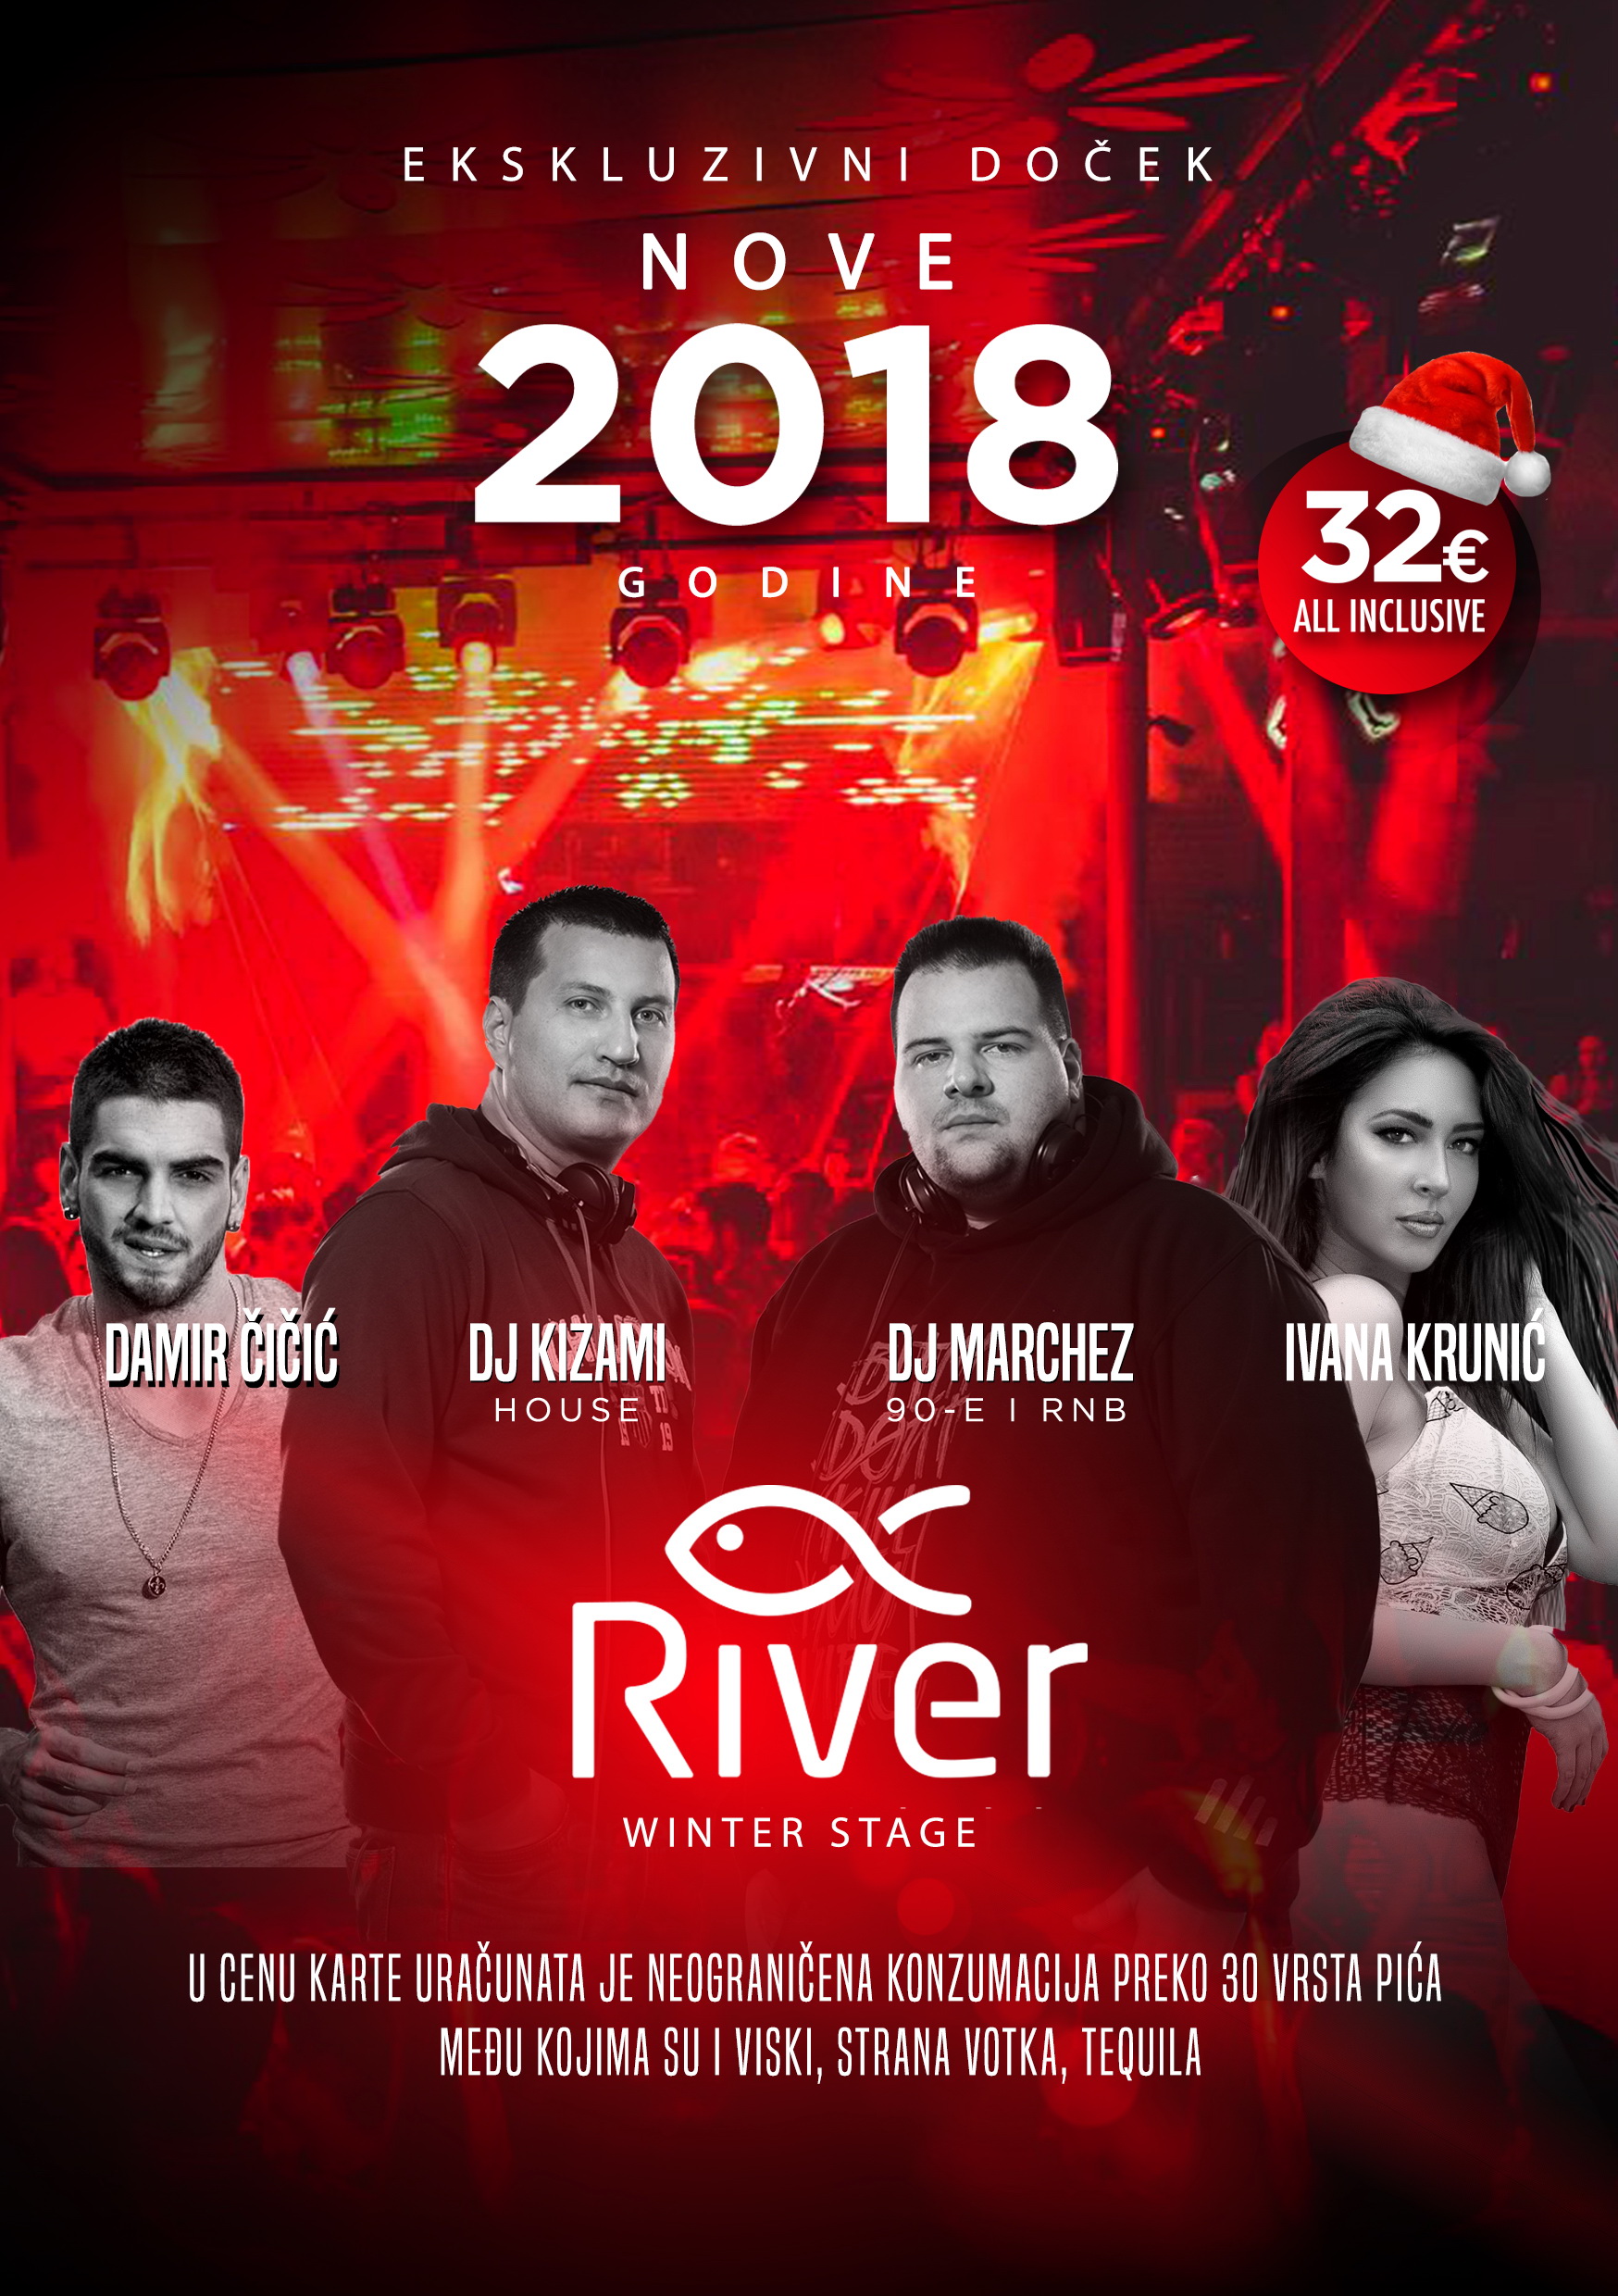 Ekskluzivan doček Nove 2018. godine Winter stage – splav River